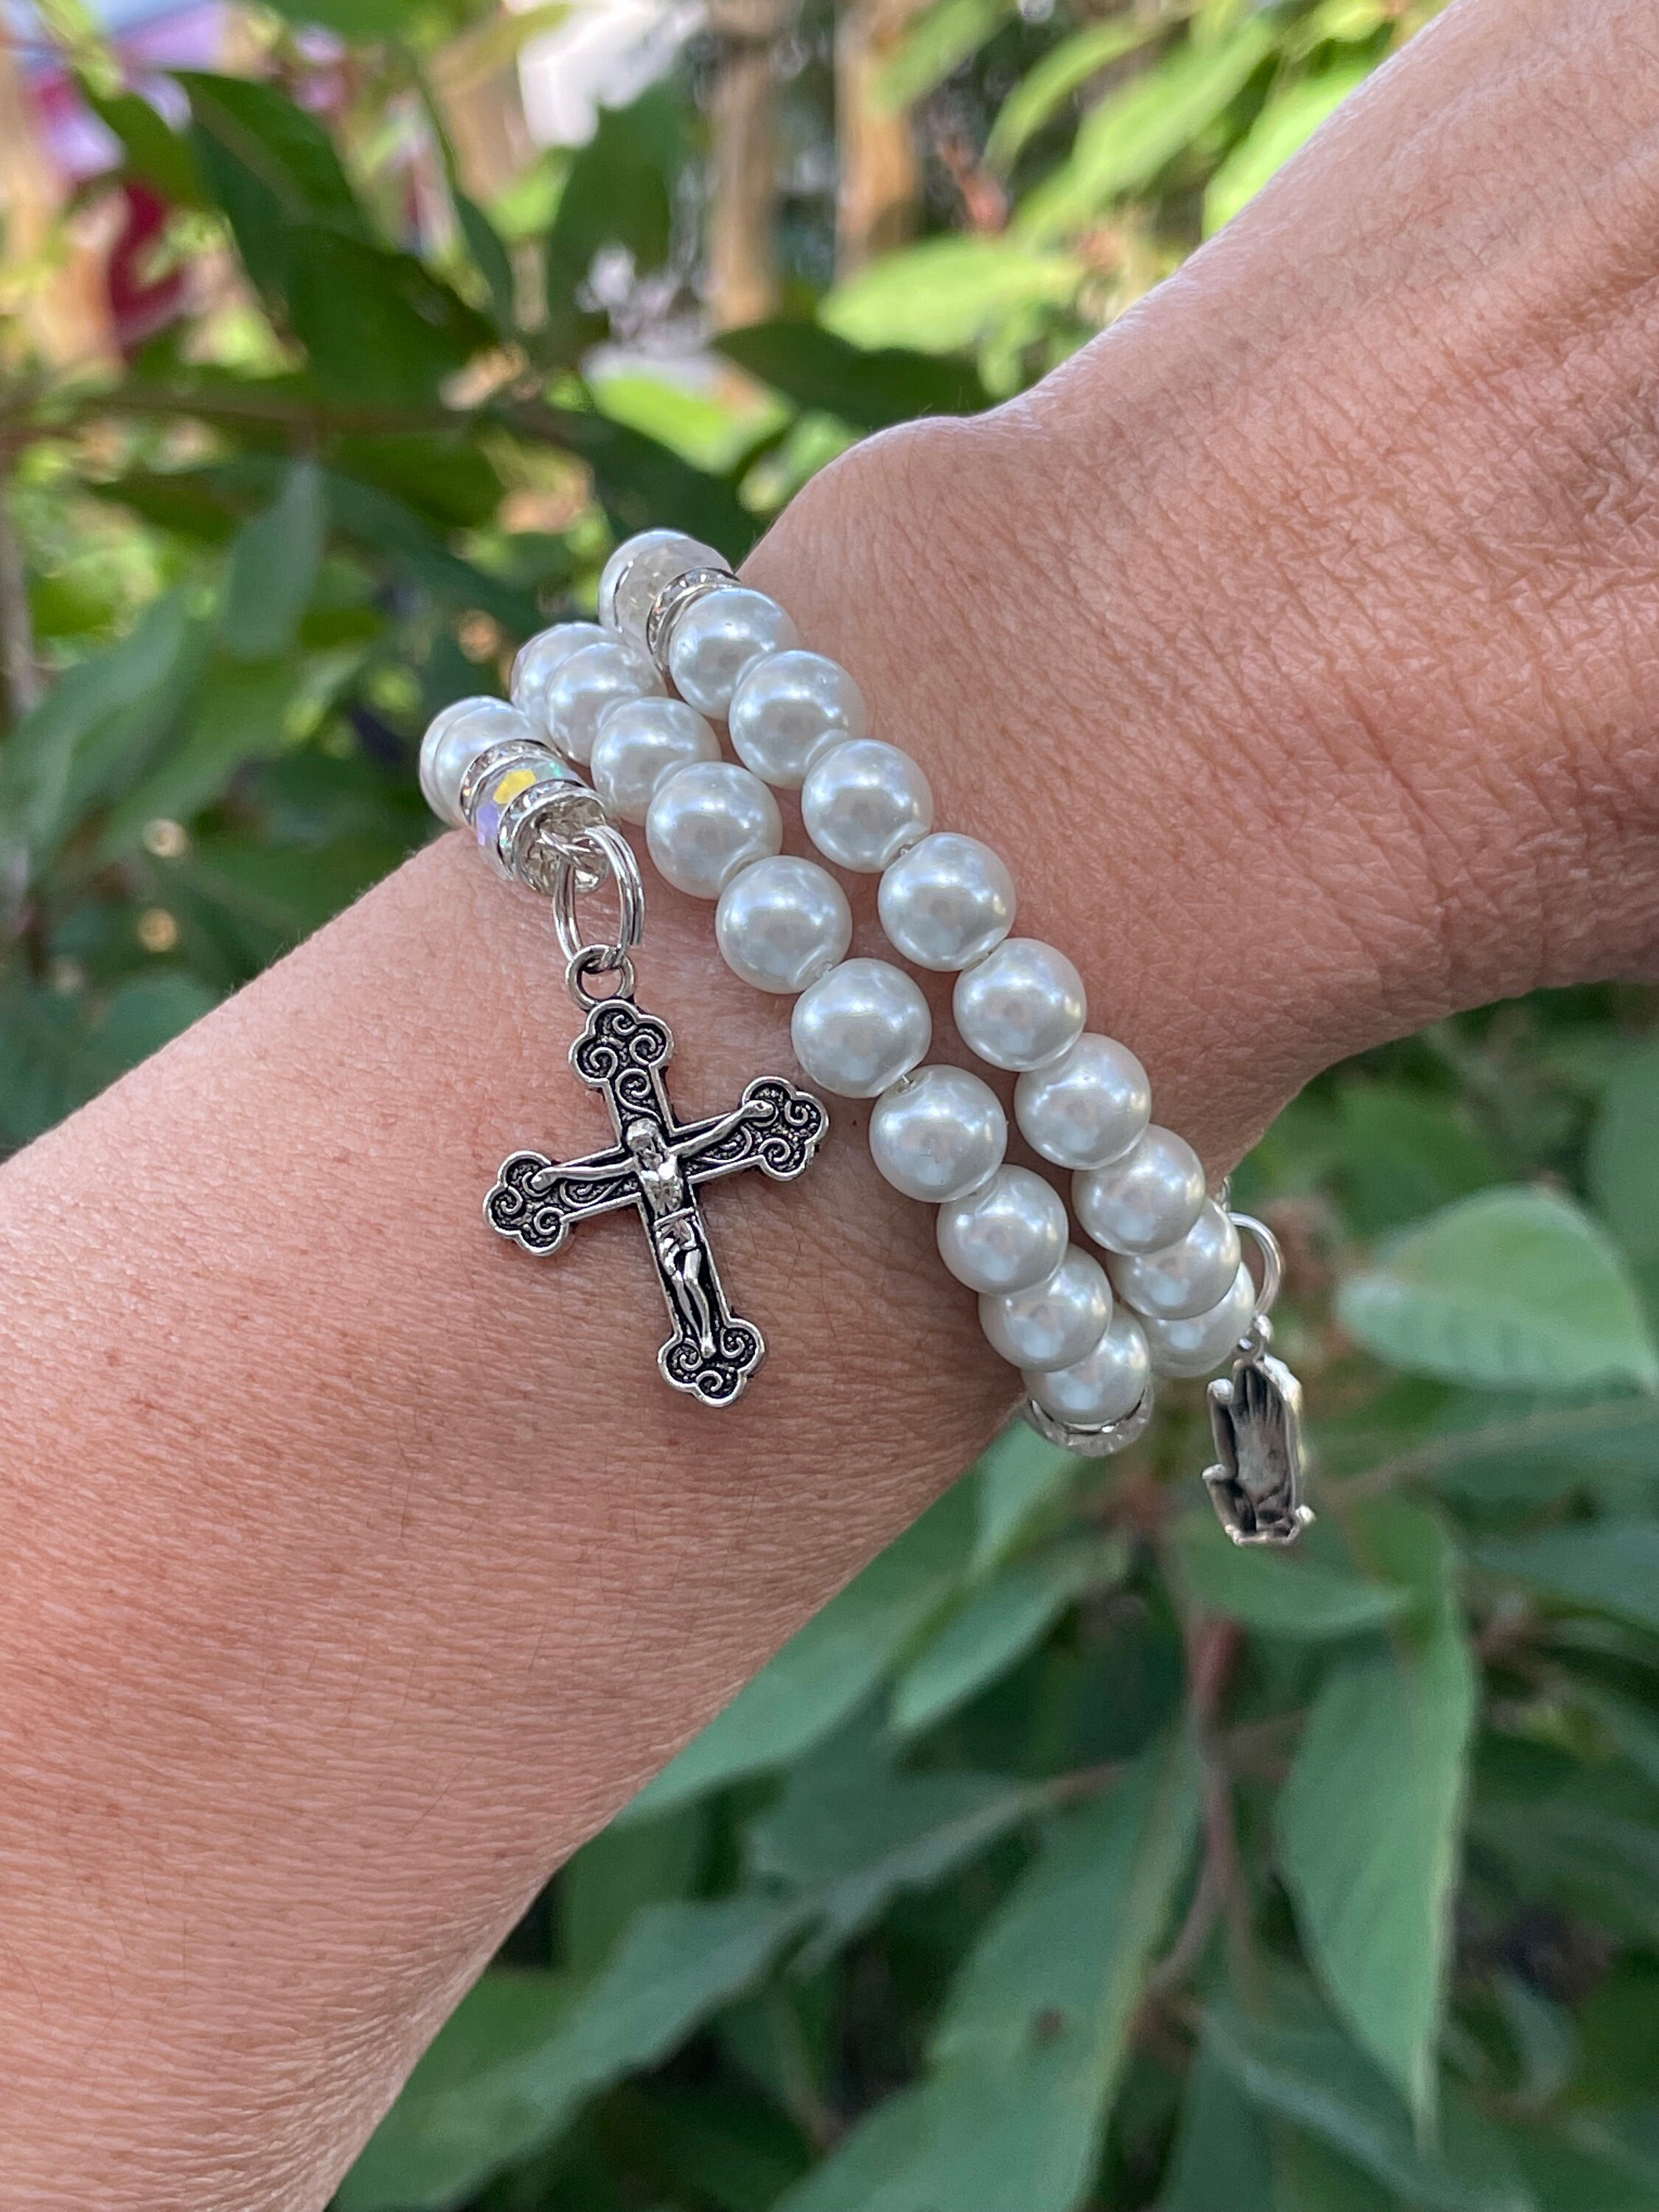 Catholic Rosaries Prayer Necklace and bracelet's lot sale 